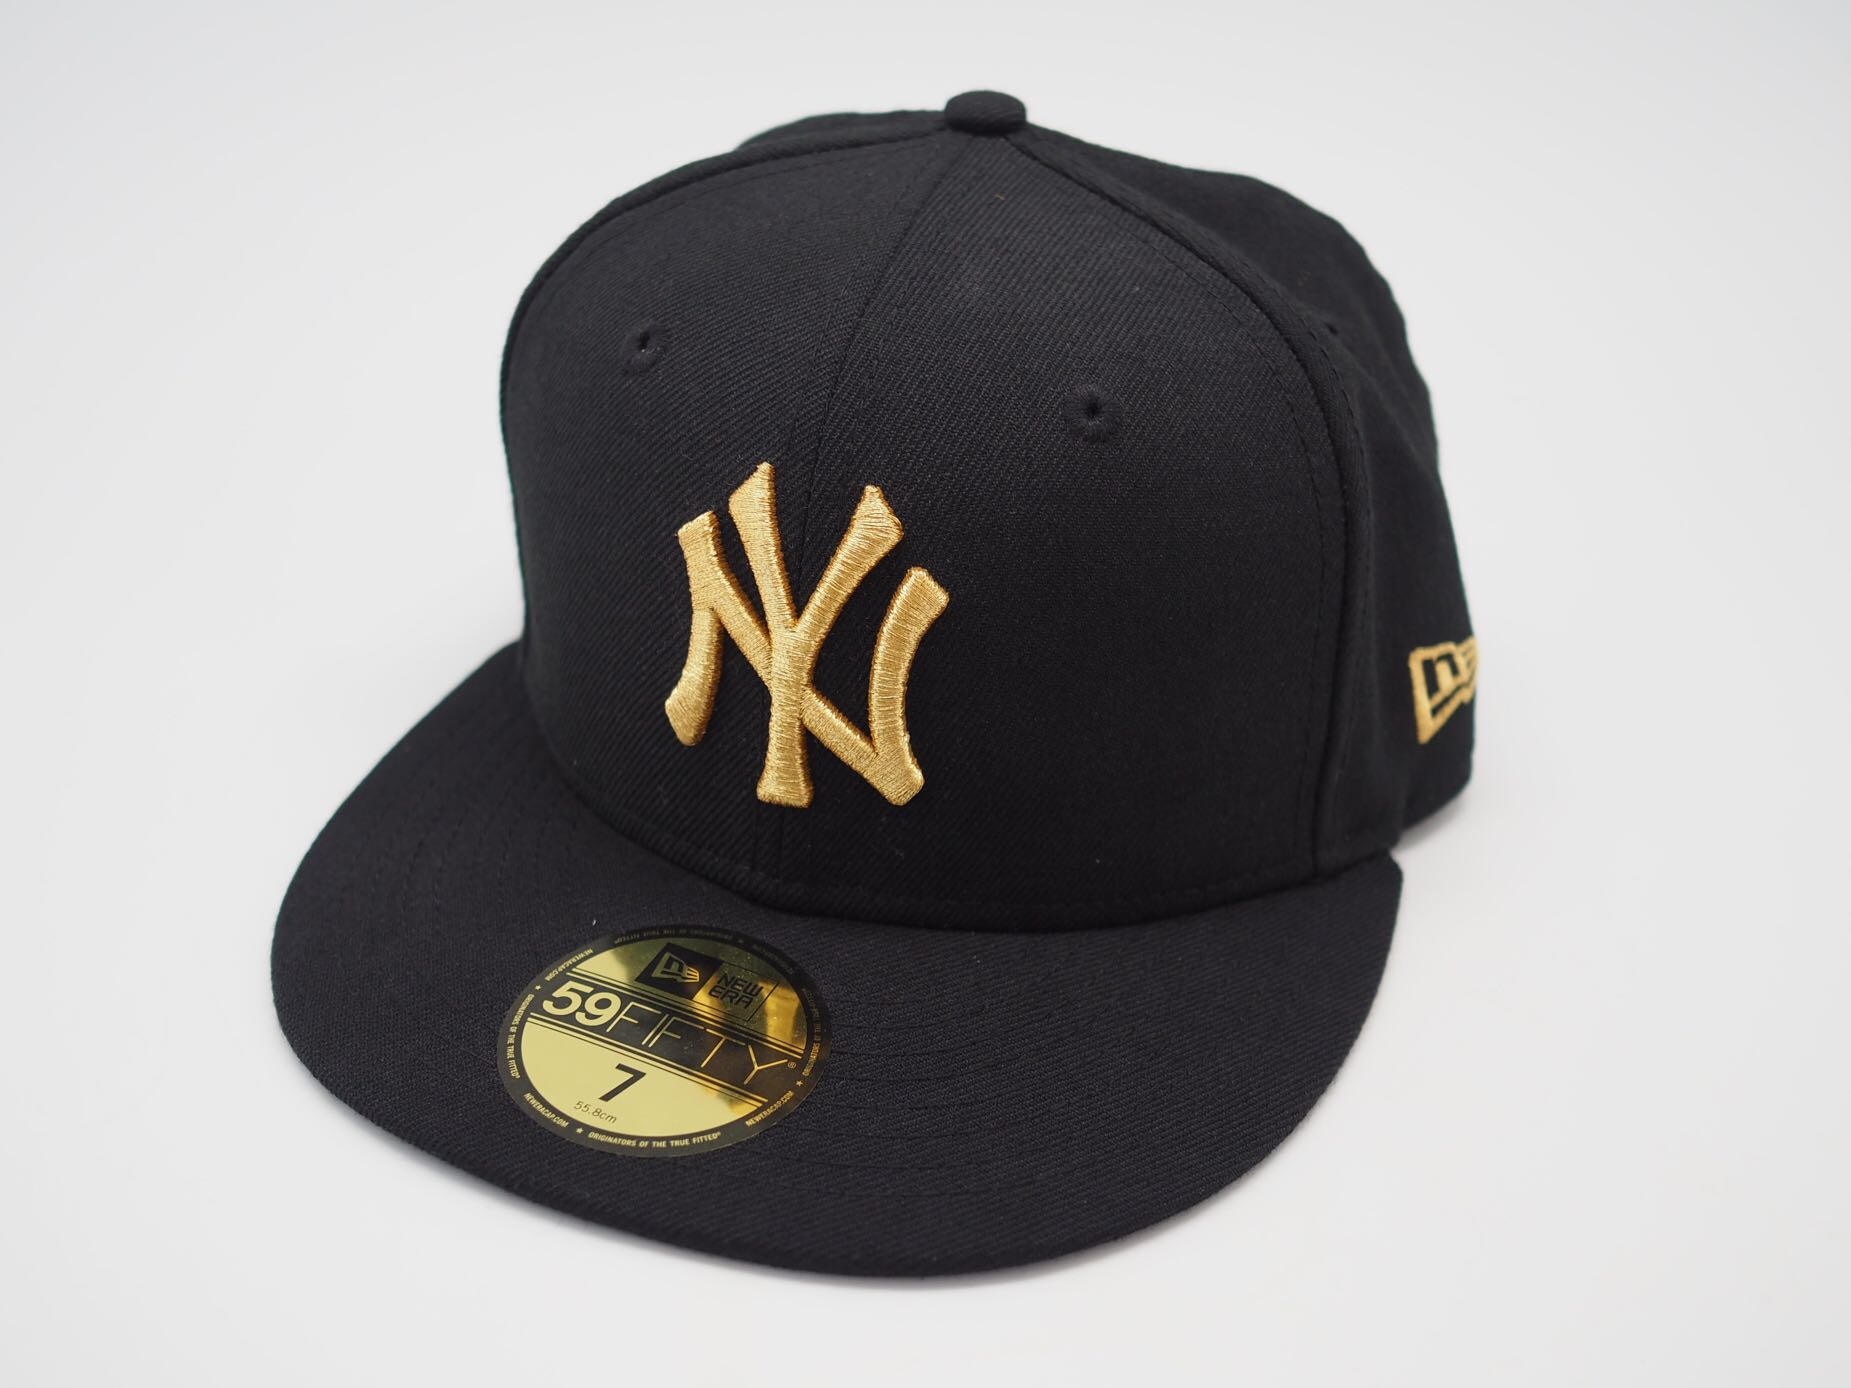 New Era Ny Yankees Goldblack 59fifty Fitted Baseball Cap By New Era X Mlb 1549880609 06c2615d 